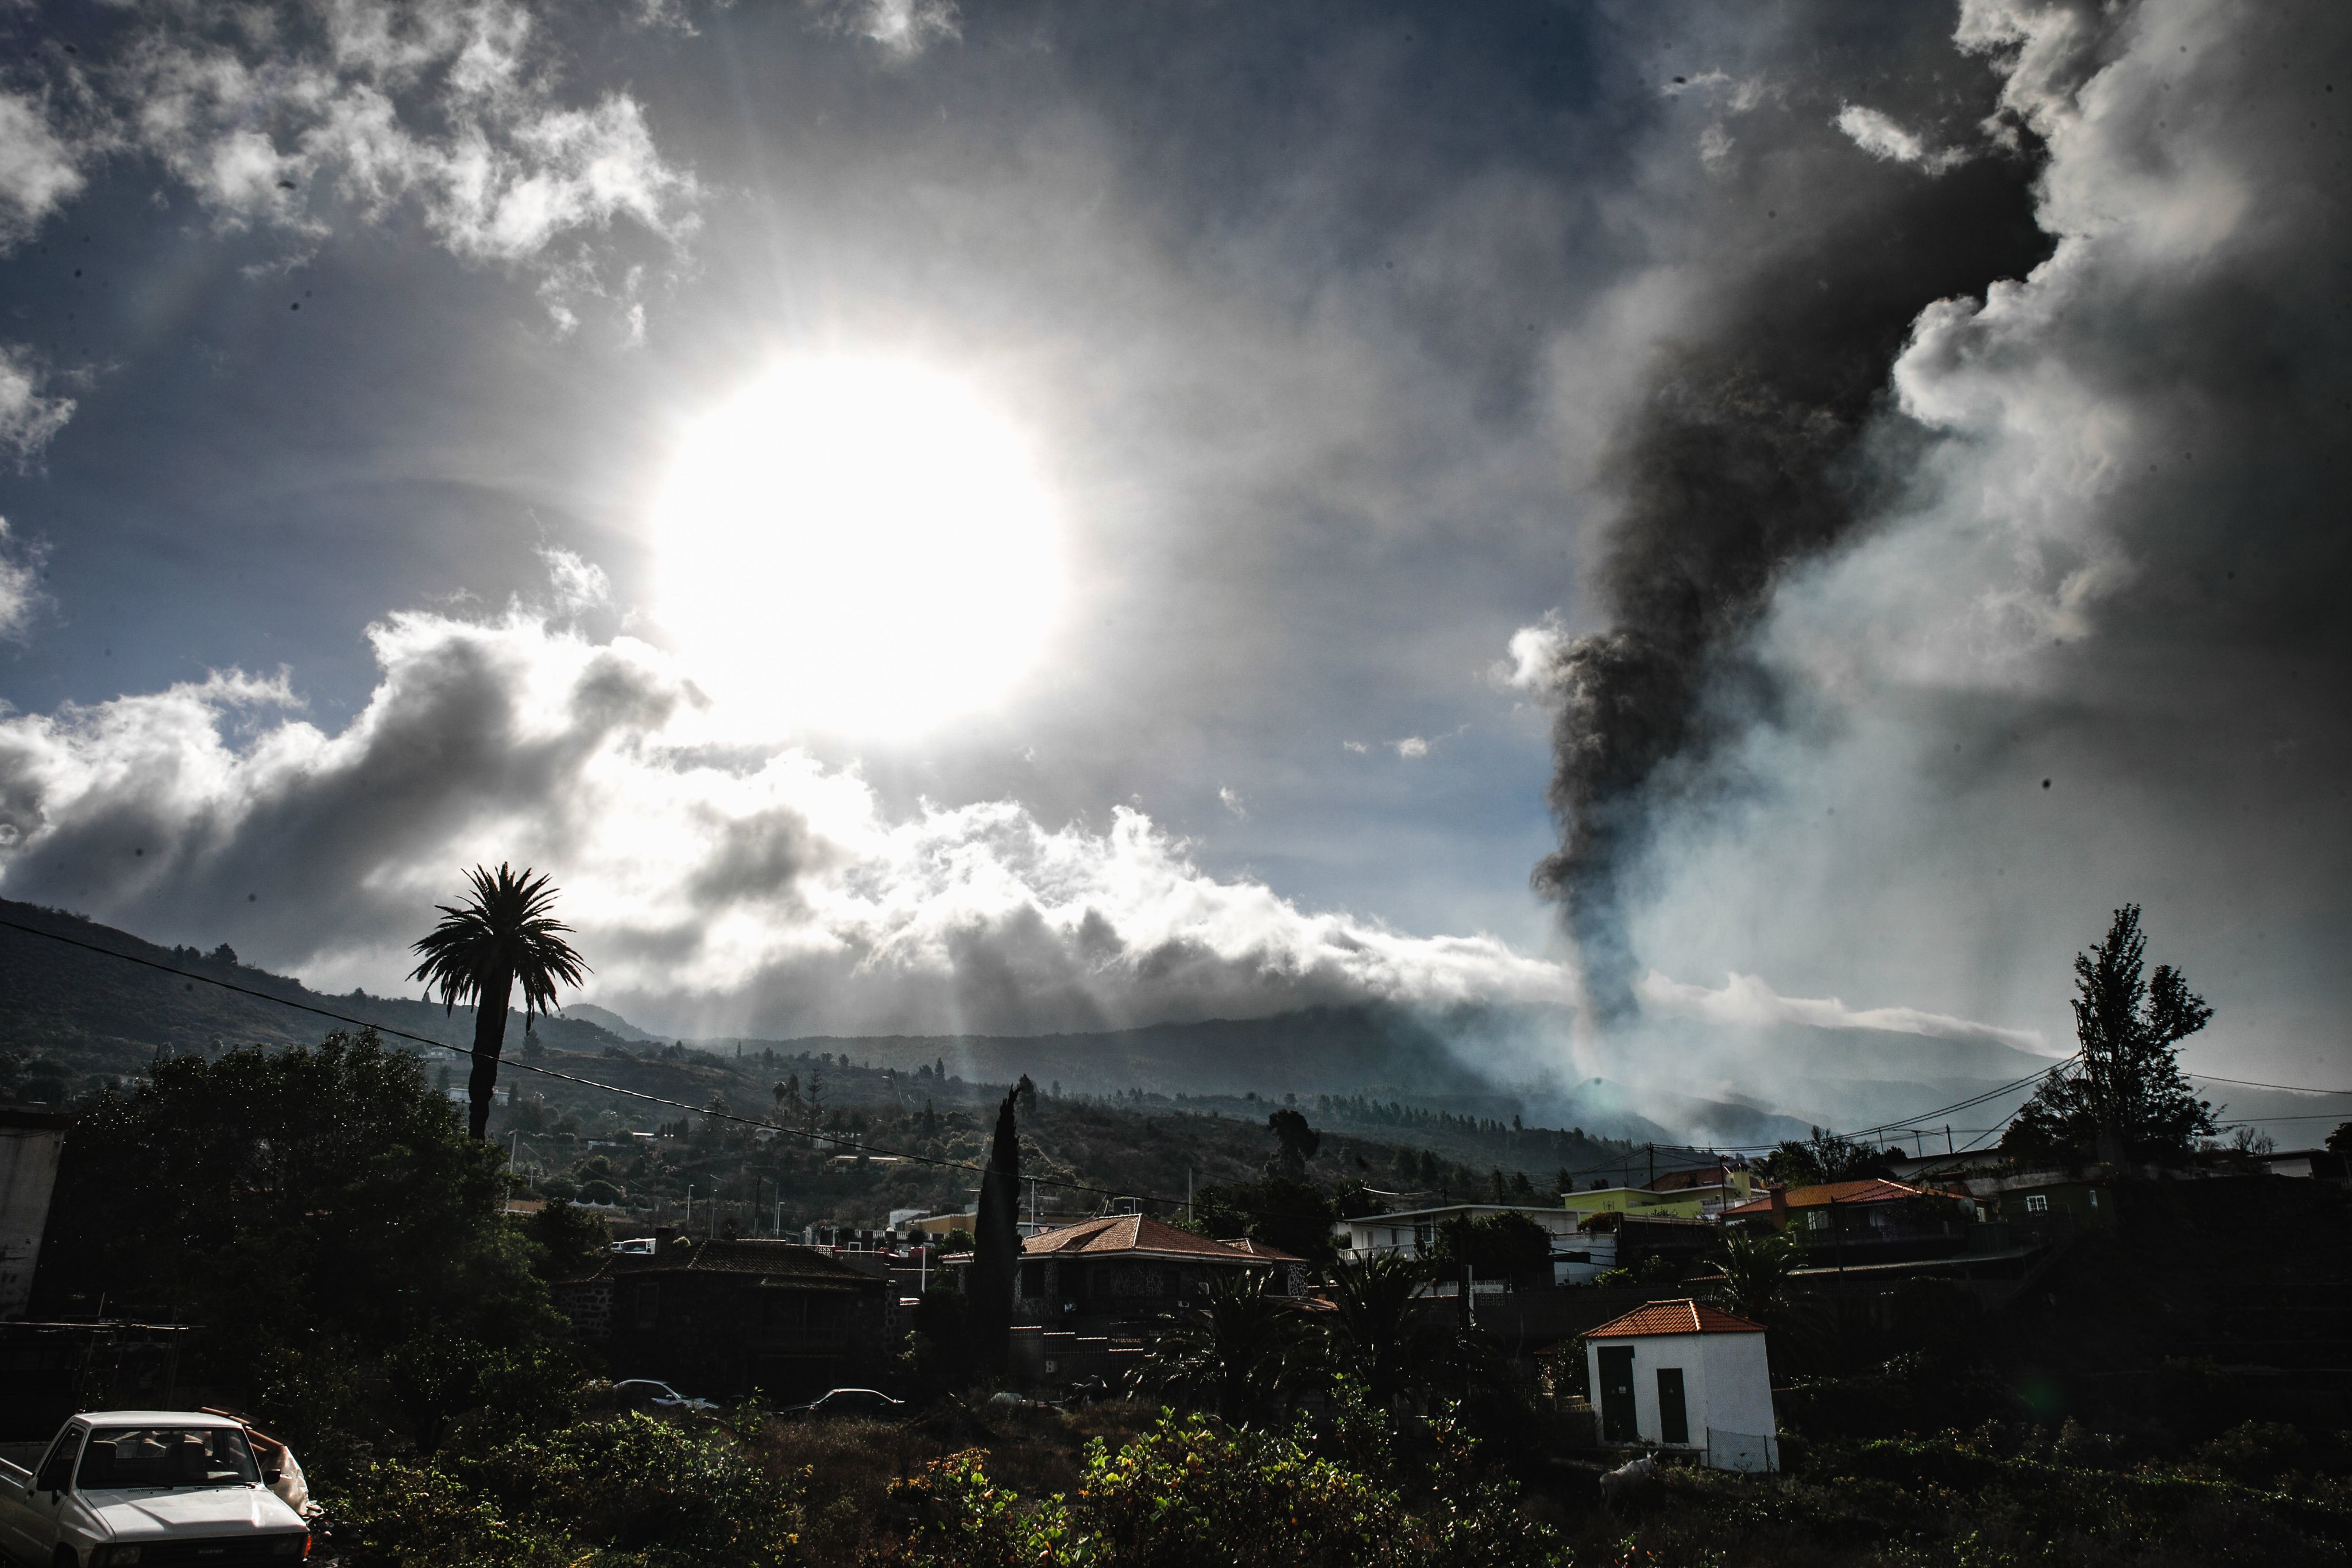 Evacuate The Town Of Todoque, In Los Llanos De Aridane (la Palma), By The Lava From The Volcano